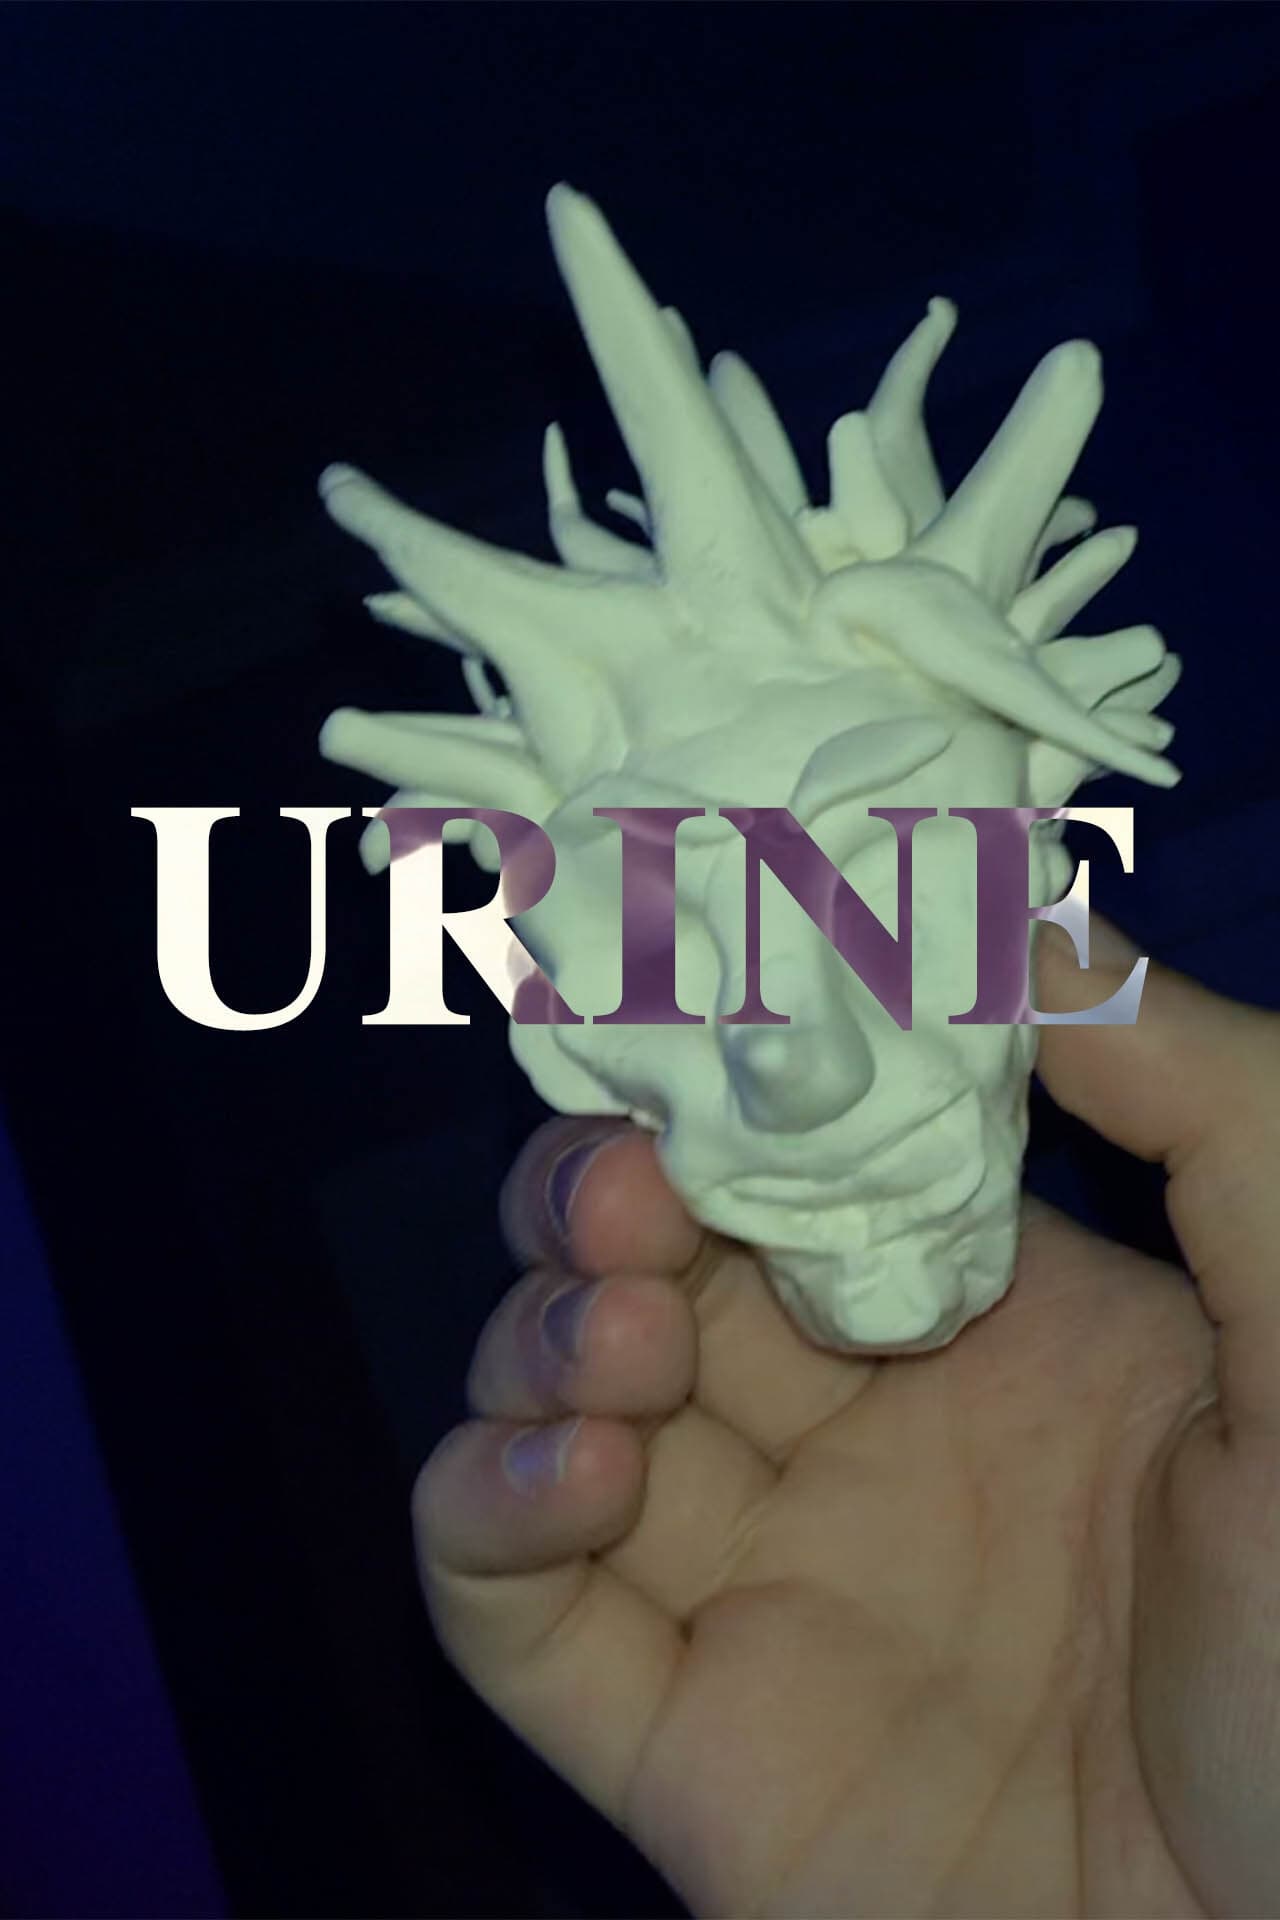 johnny urine deathwish (2021)